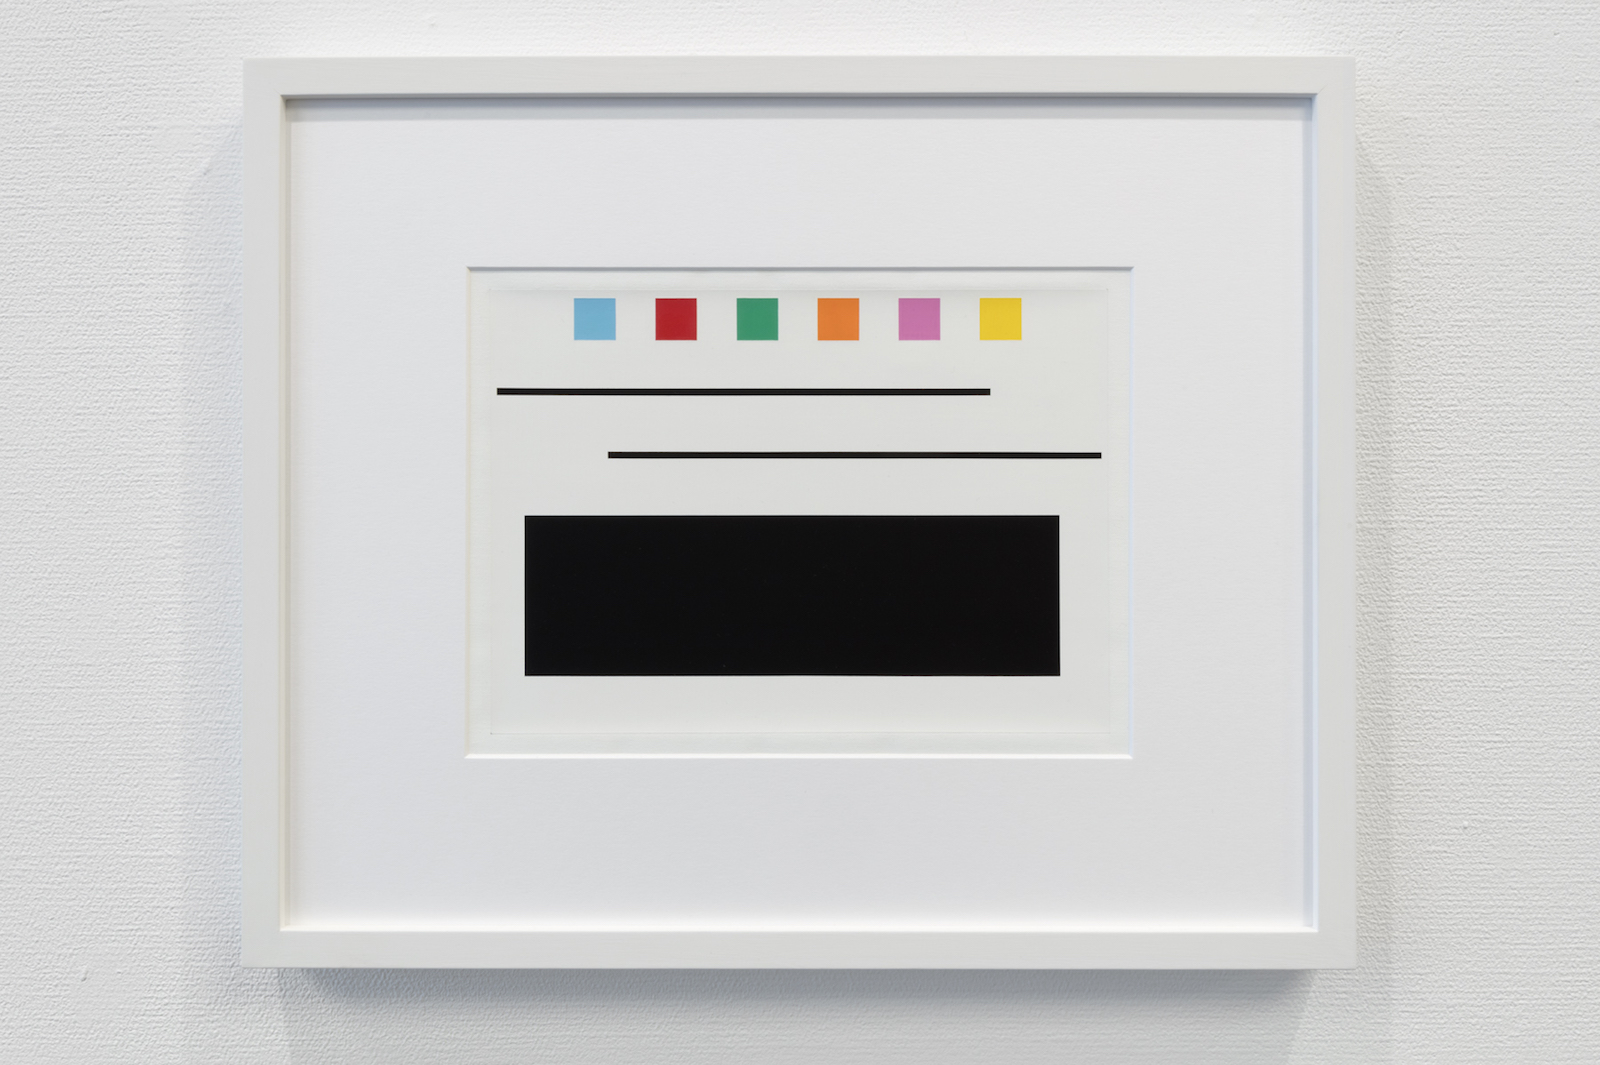 Kristoffer Nilson, "FLAGG (FLAG) I", 2017, pigment on canvas, 42 x 52 cm